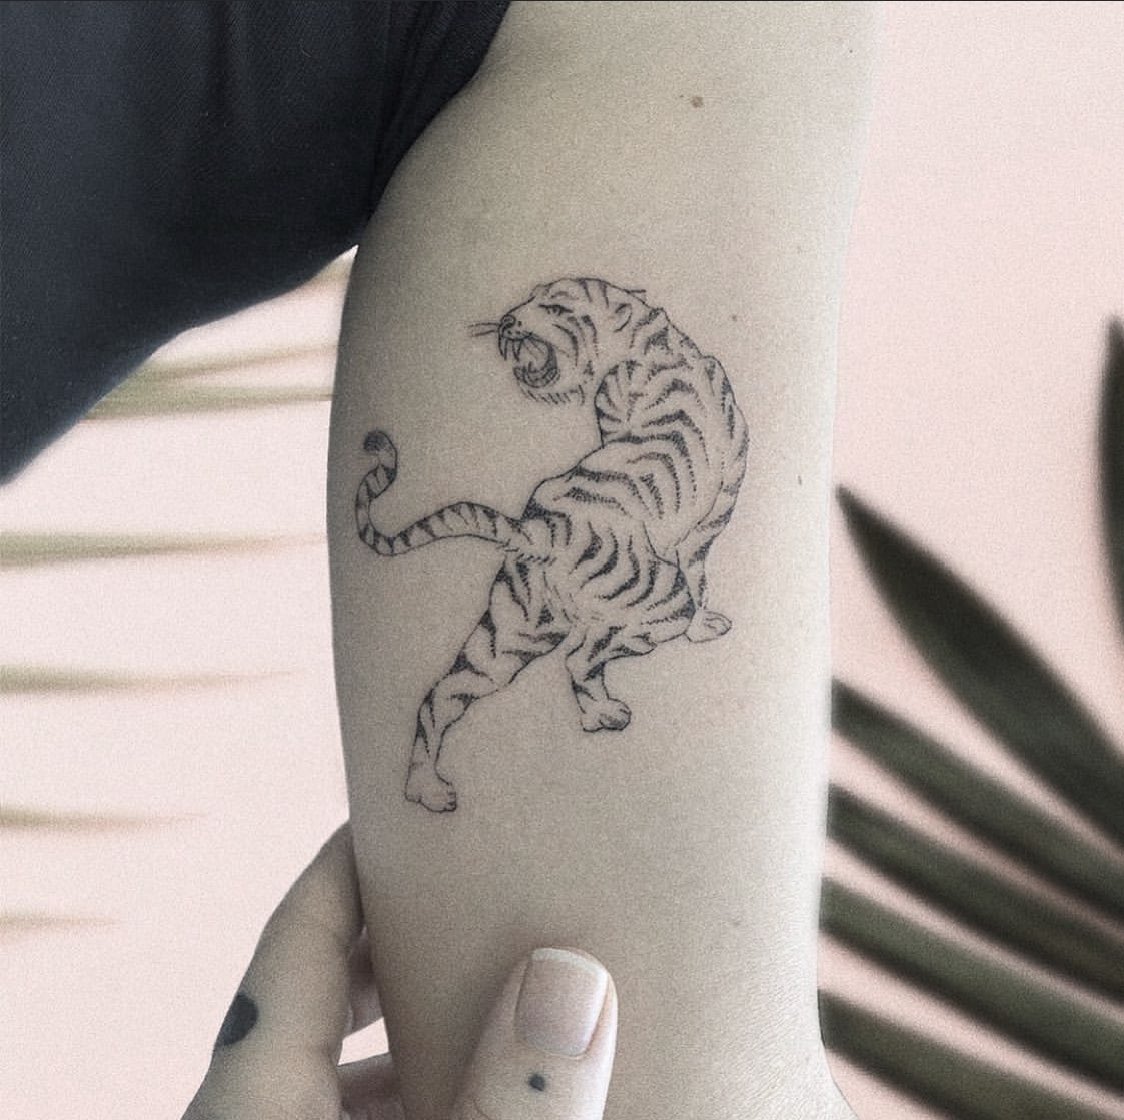 Share more than 72 minimalist tiger tattoo  thtantai2